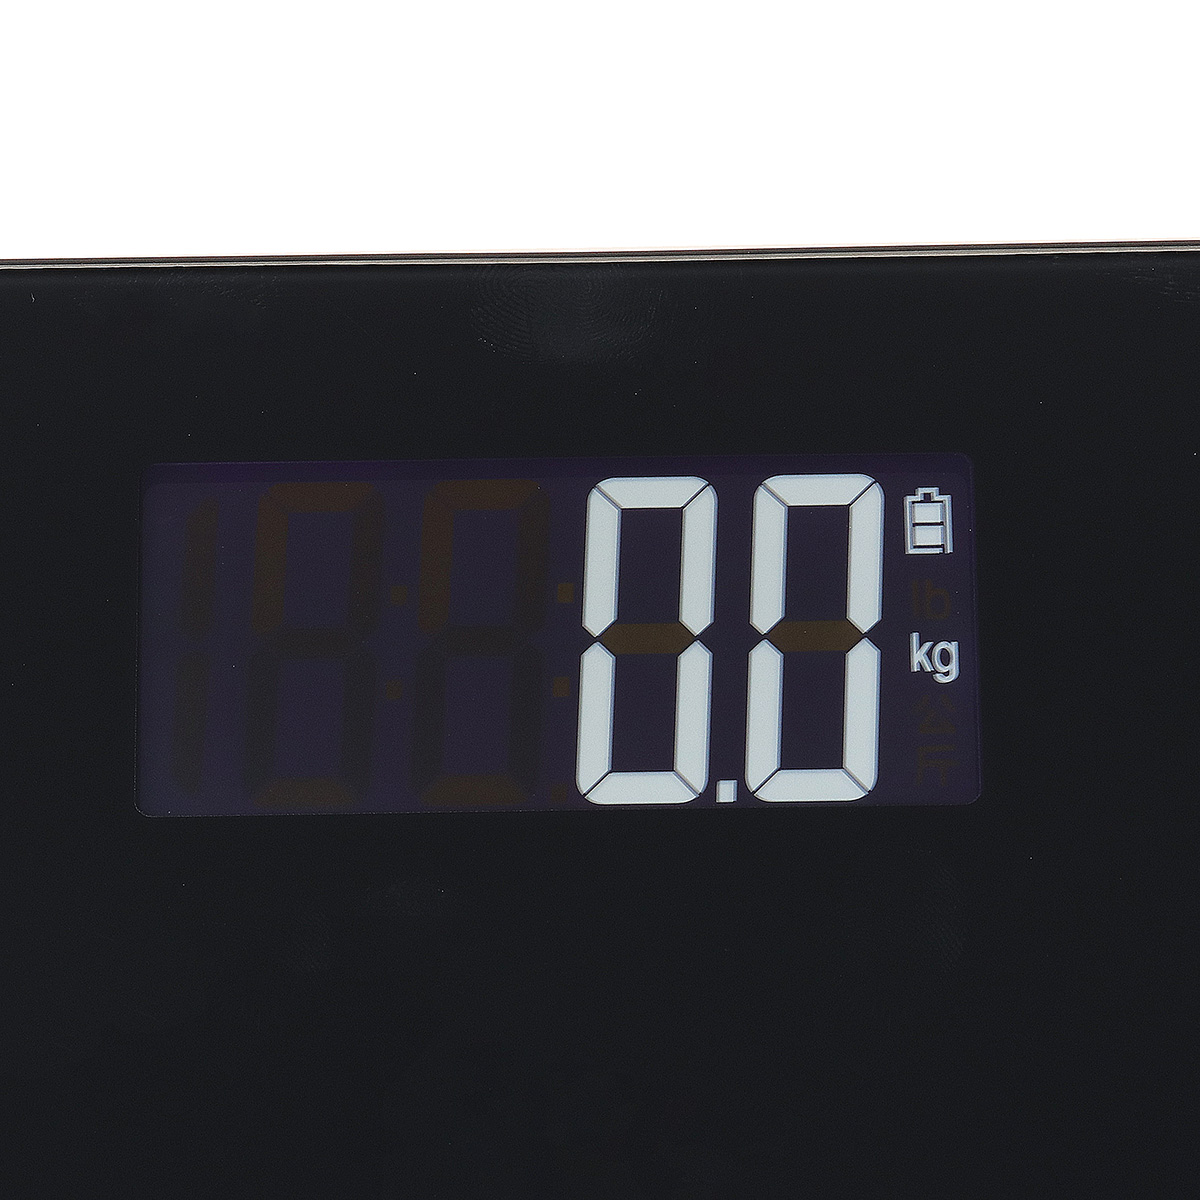 180KG-Measurement-Range-Bluetooth-Weight-Scale-With-Smart-APP-LED-Digital-Display-Bathroom-Body-Weig-1706885-10